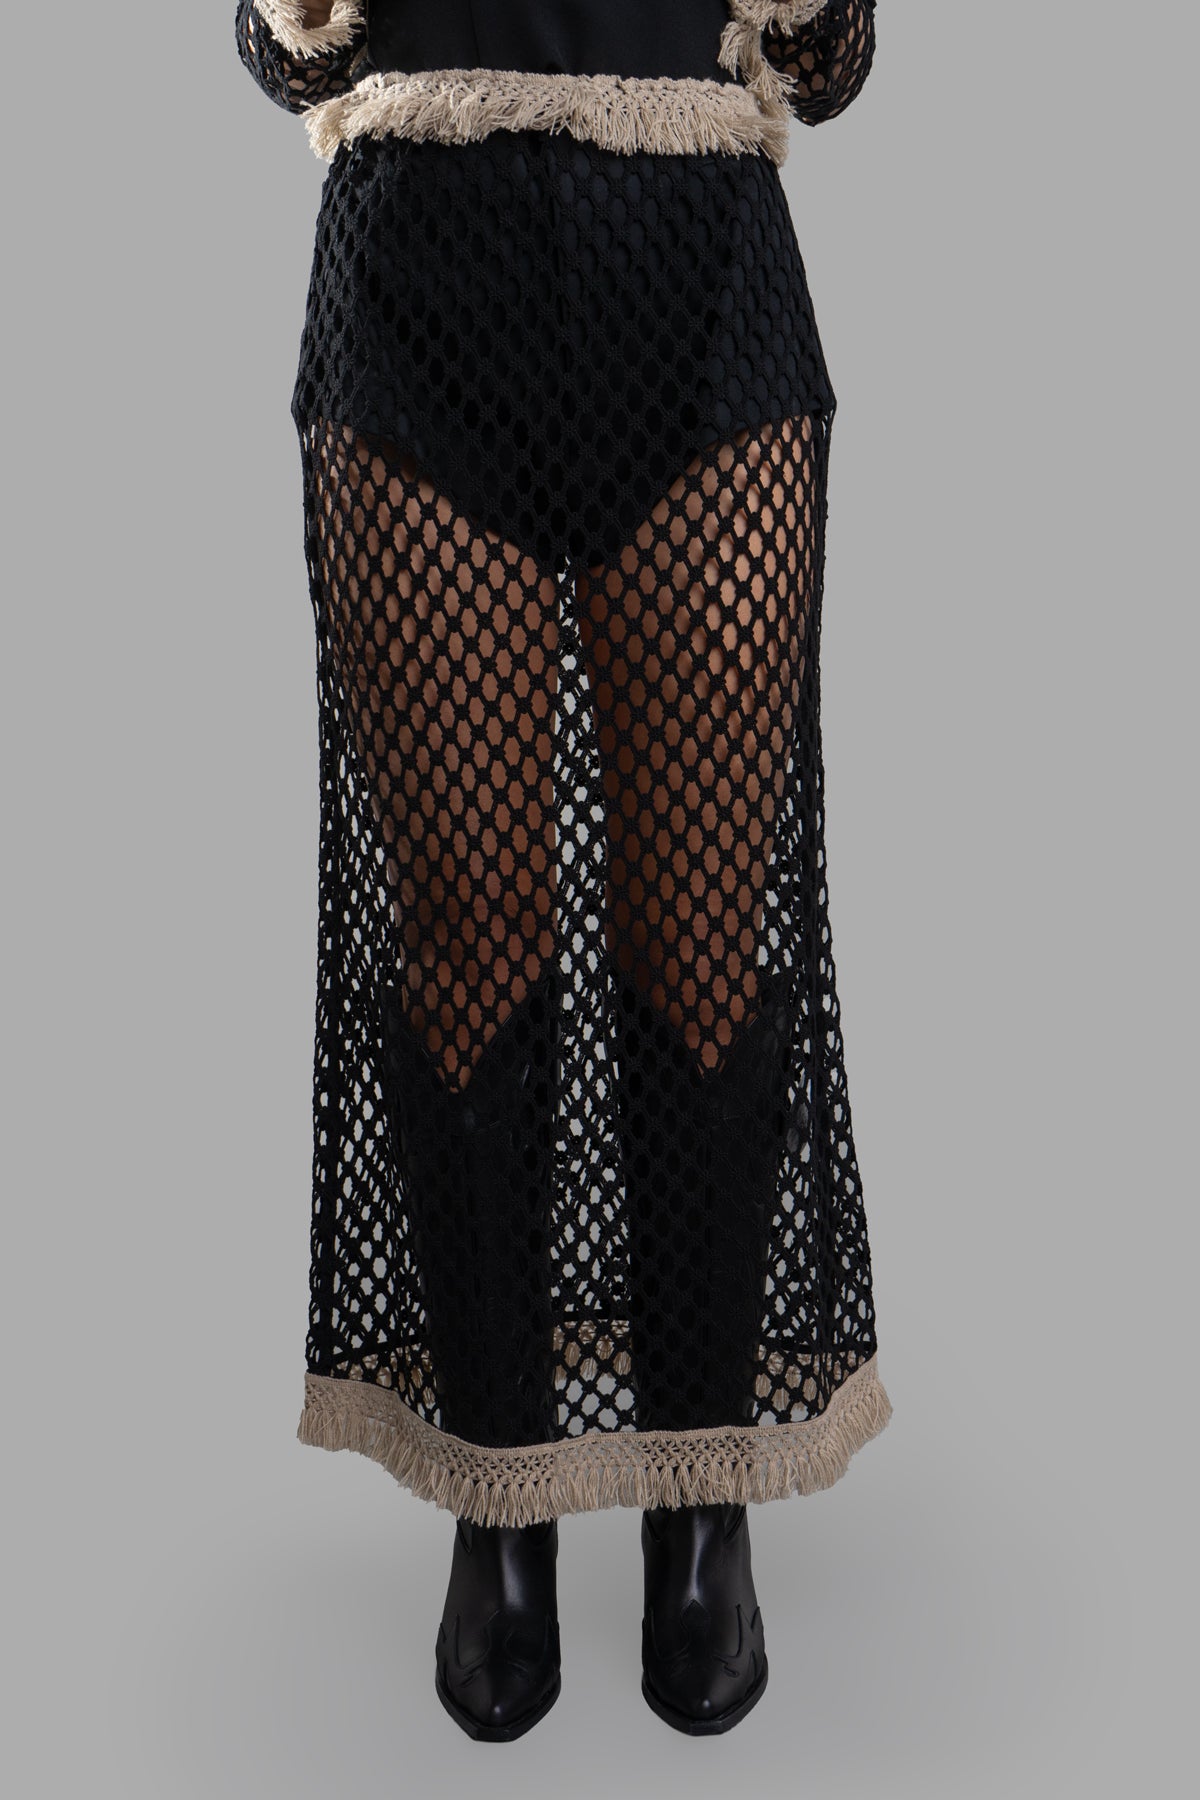 Crochet Maxi Skirt